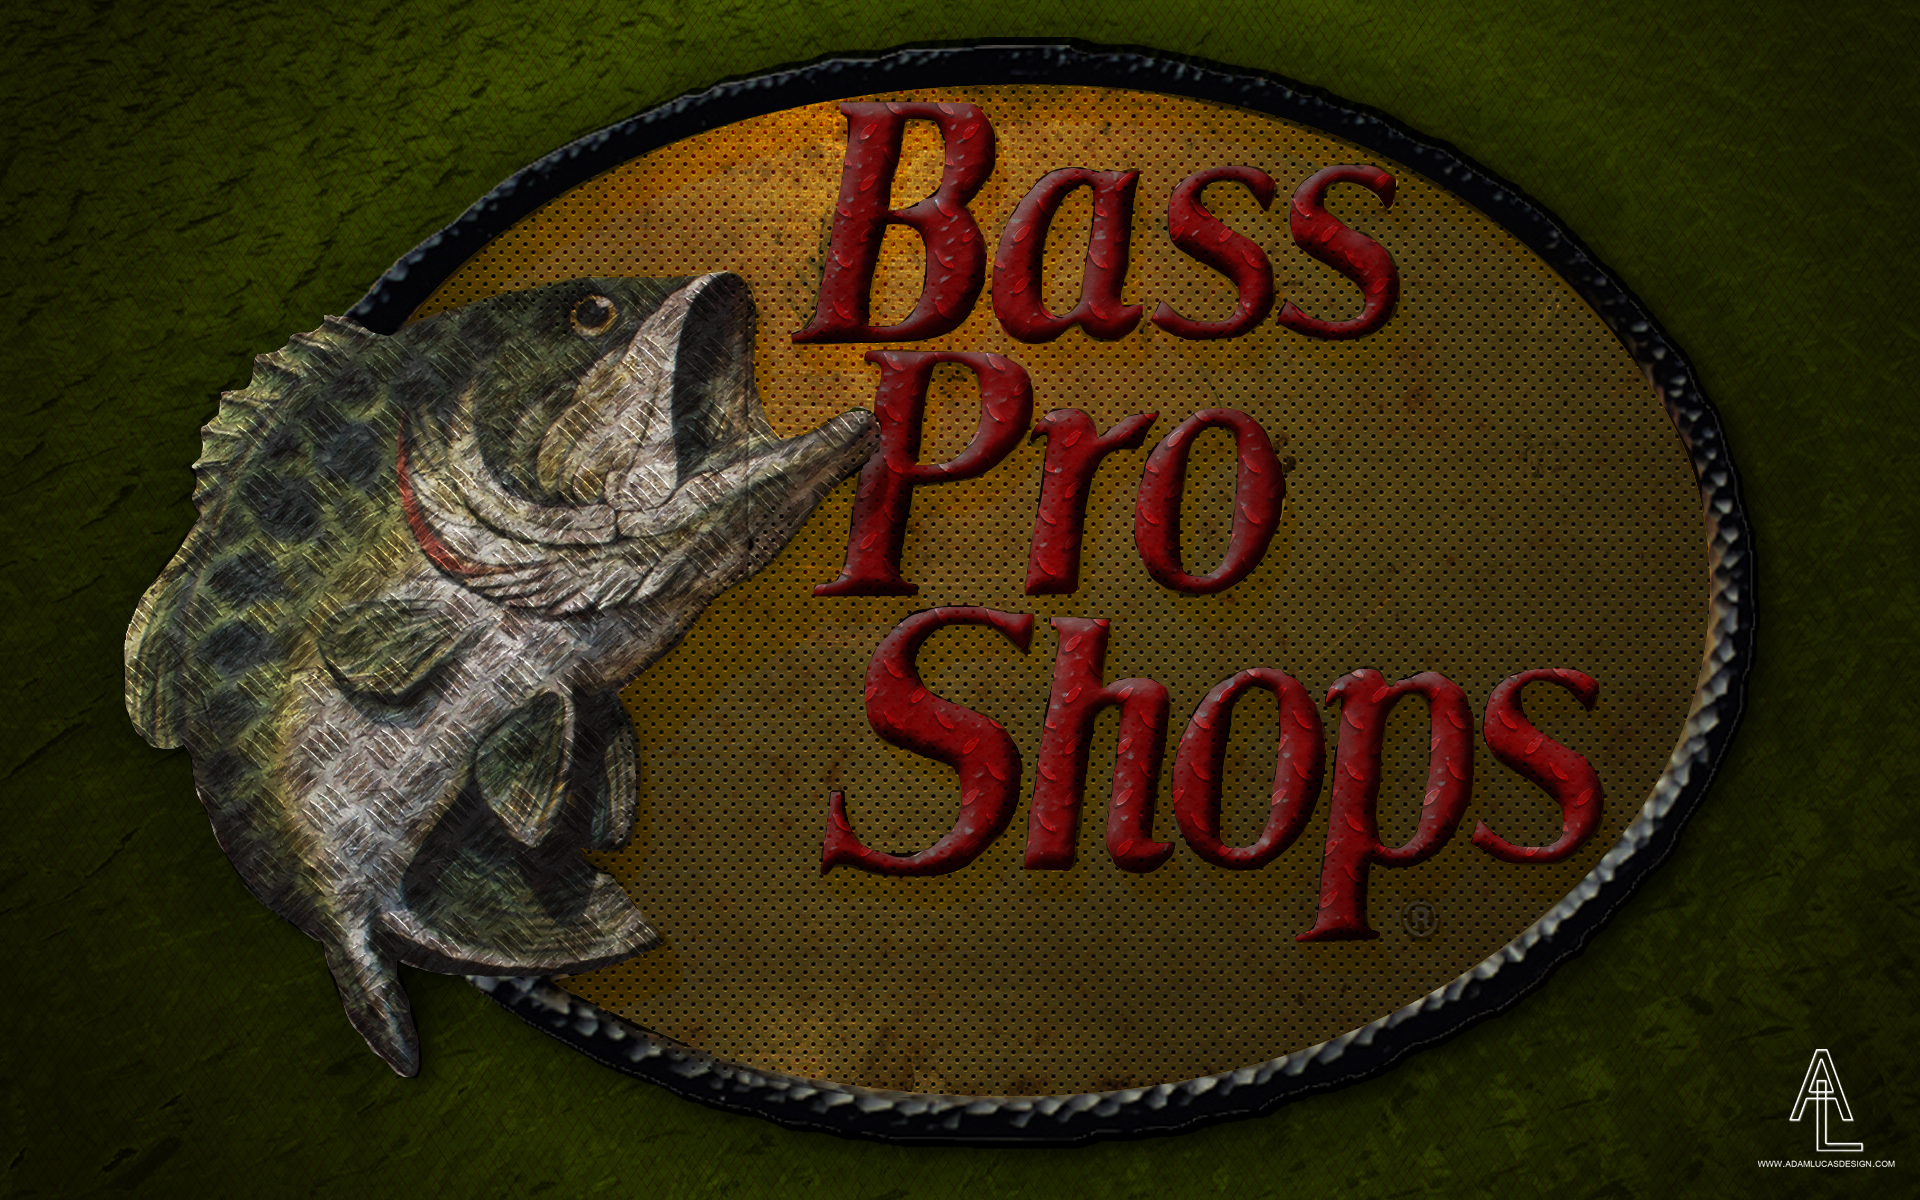 Сказки басс. Bass Pro shops logo. Bass shop Fishing. Bass Pro shops футболка. Bass Pro shops кепка.